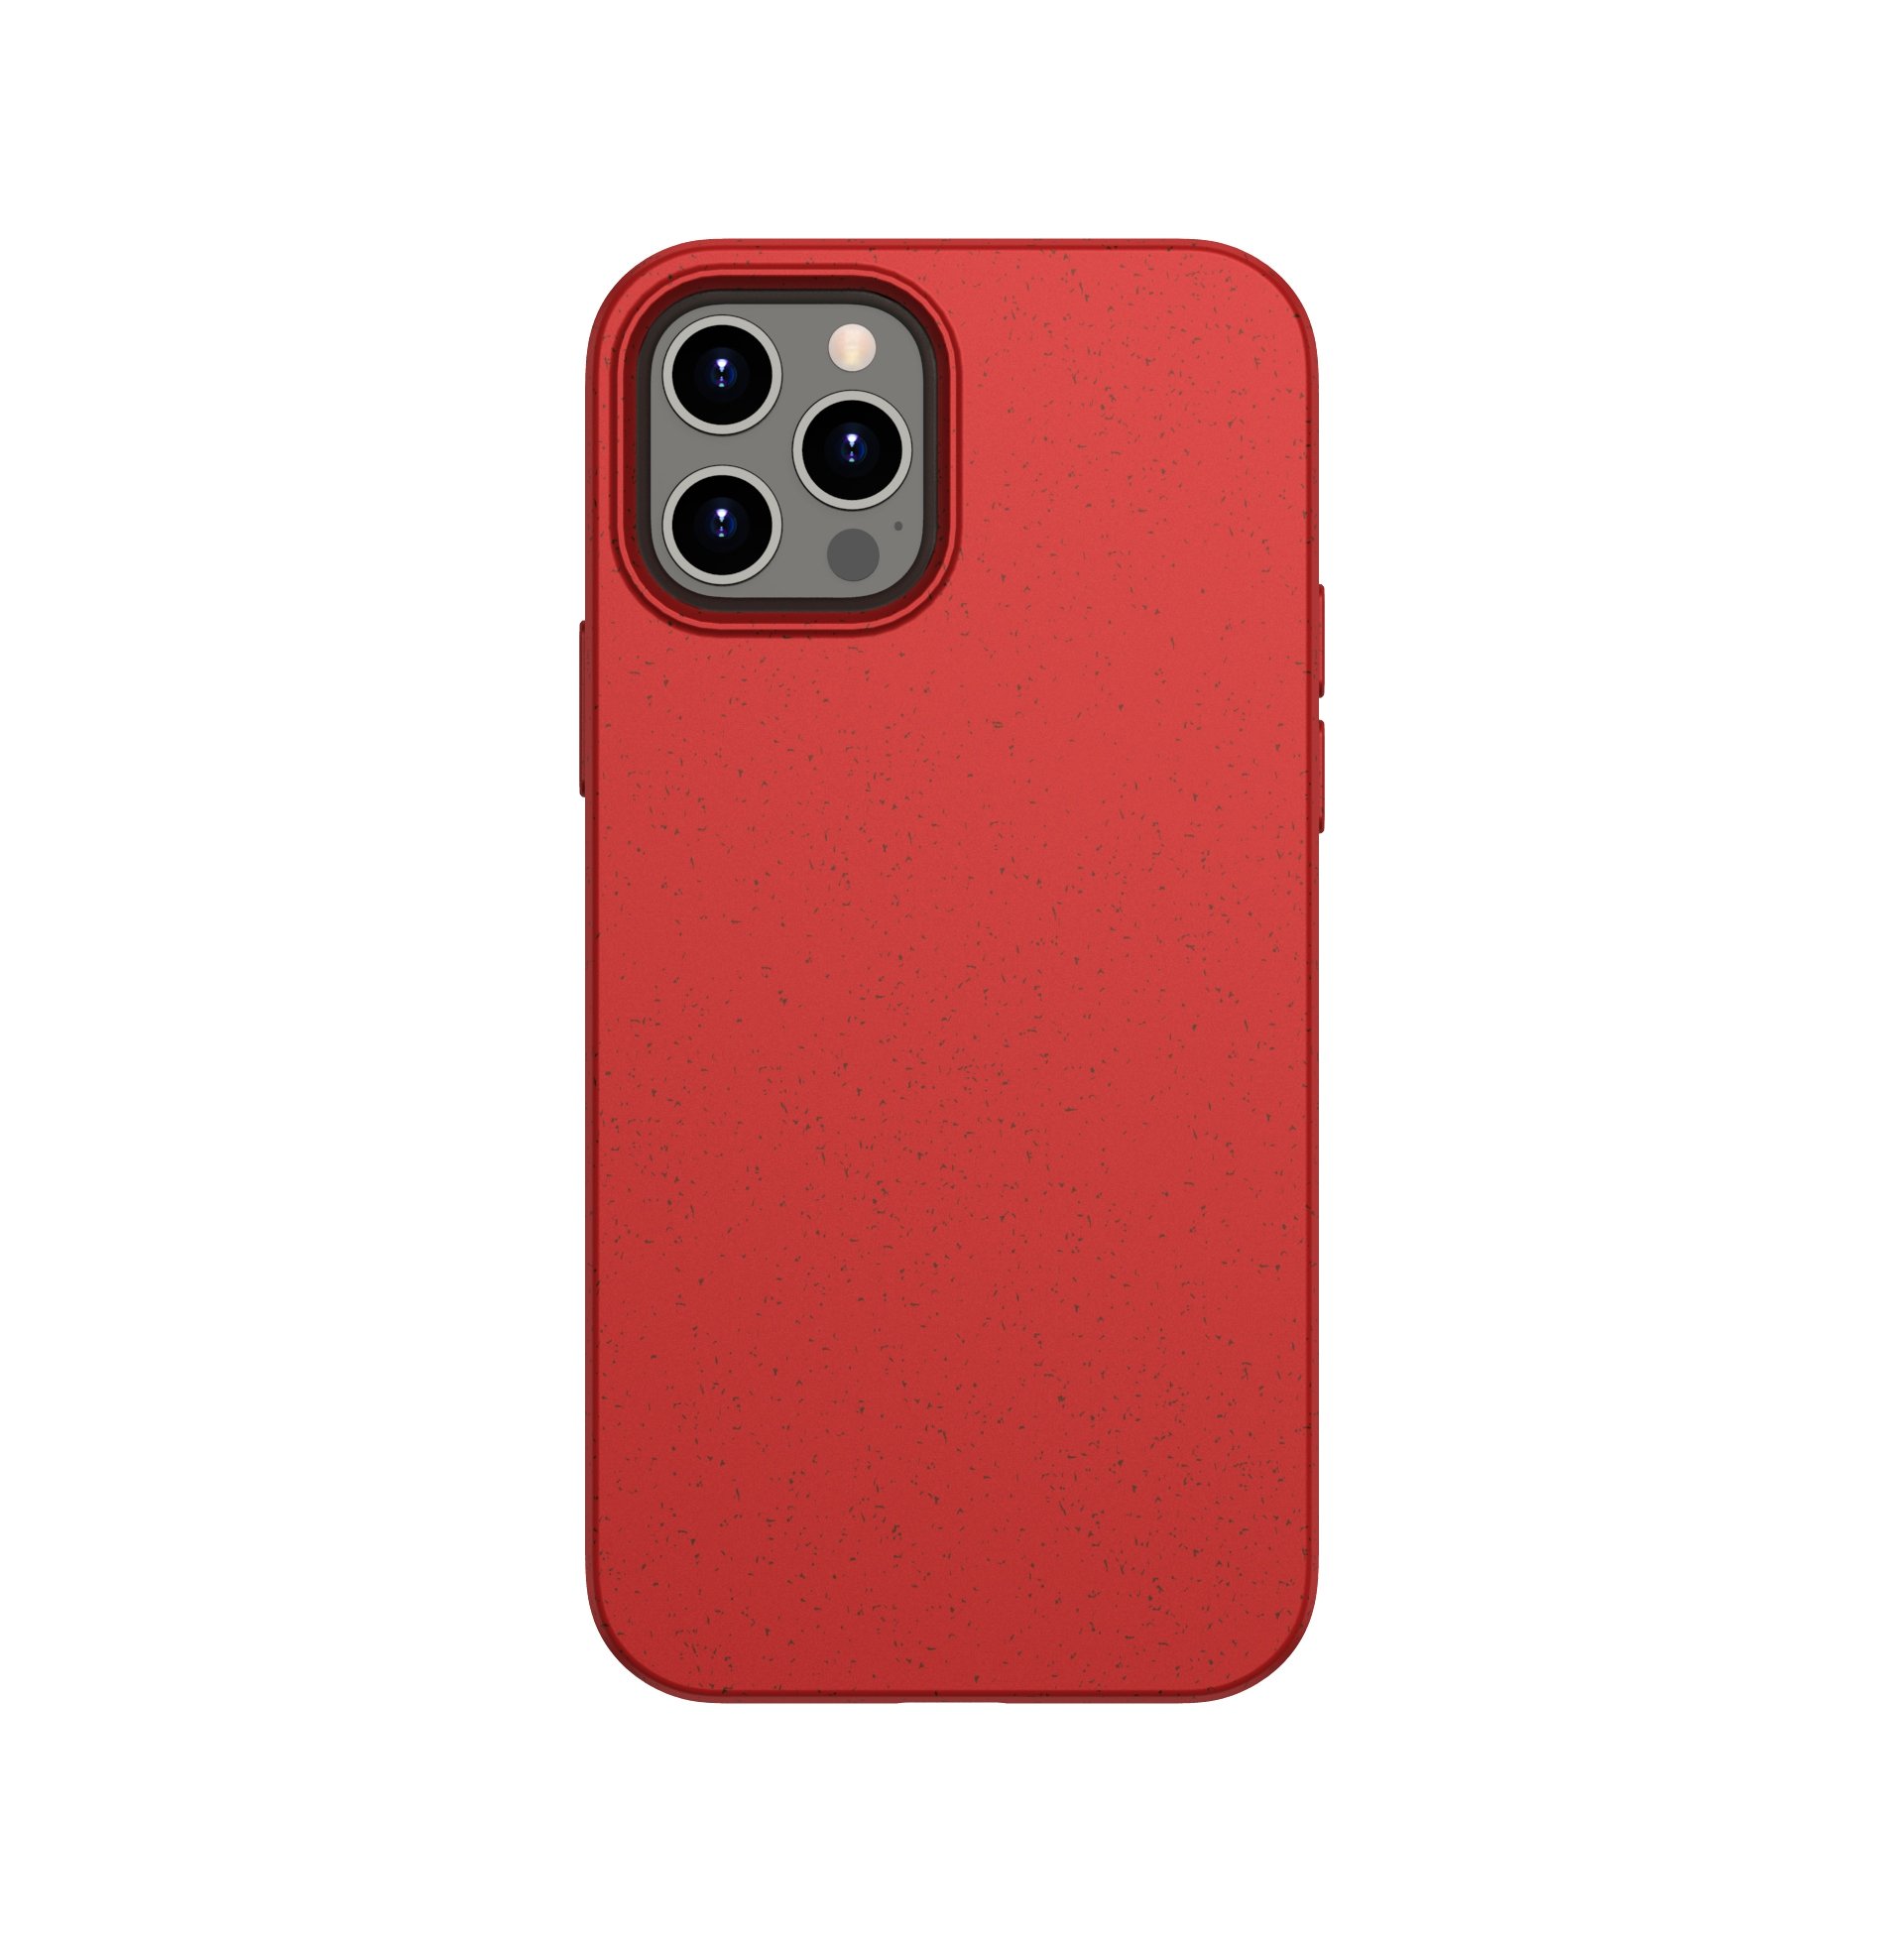 Husa de protectie telefon EnviroBest pentru iPhone 12/12 Pro, EP4, Material biodegradabil, Rosu